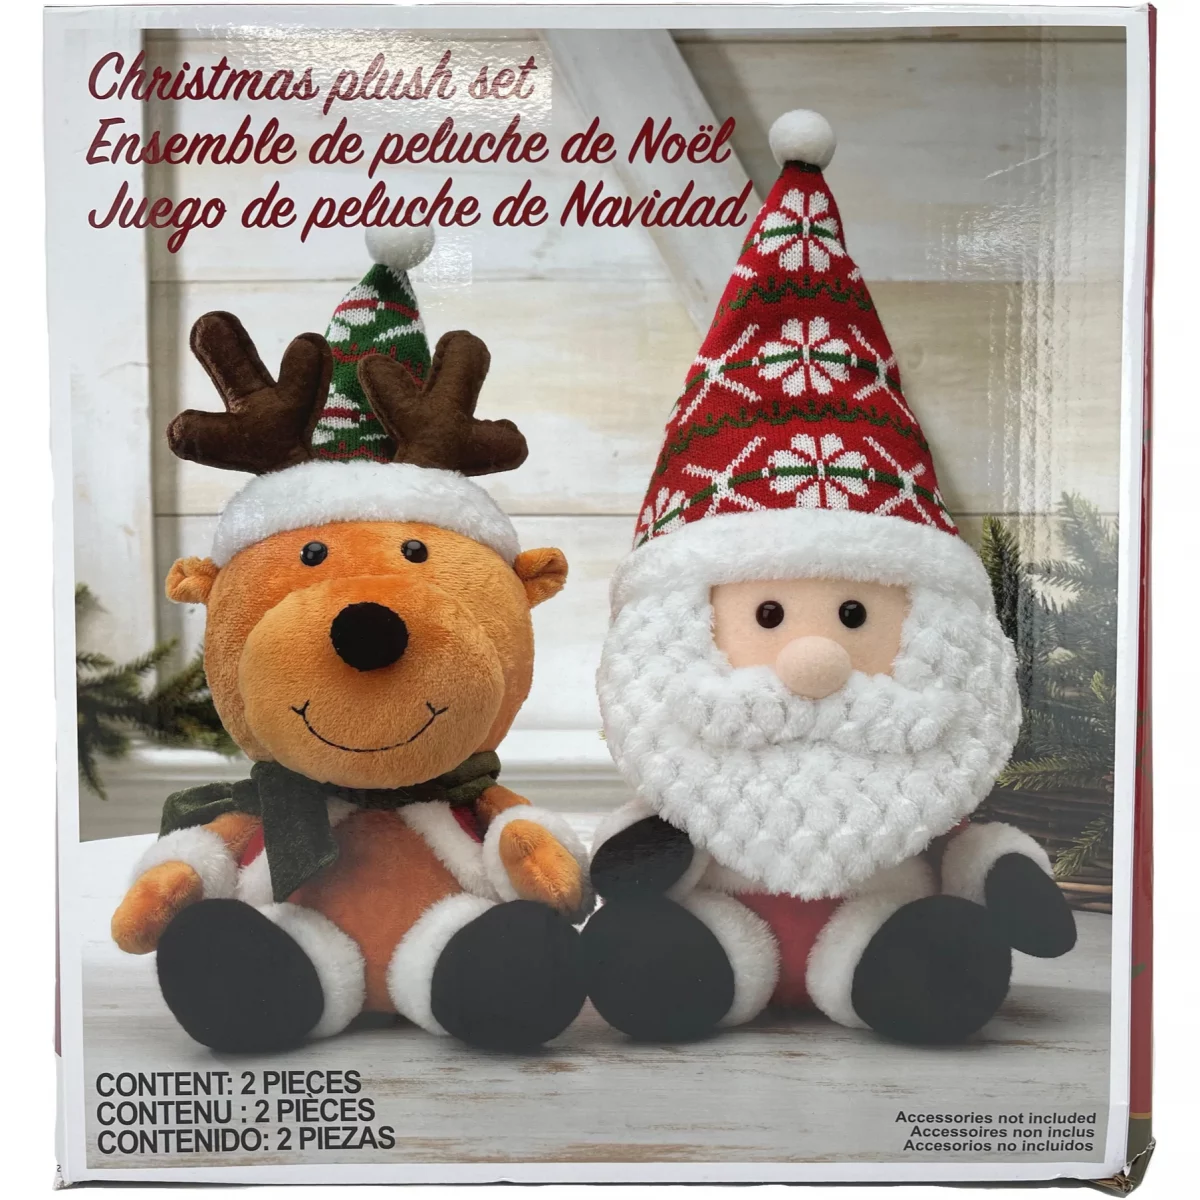 Holiday Home Decor / Santa Claus and Reindeer Plush Set / Set of 2 / Christmas Decor **DEALS**